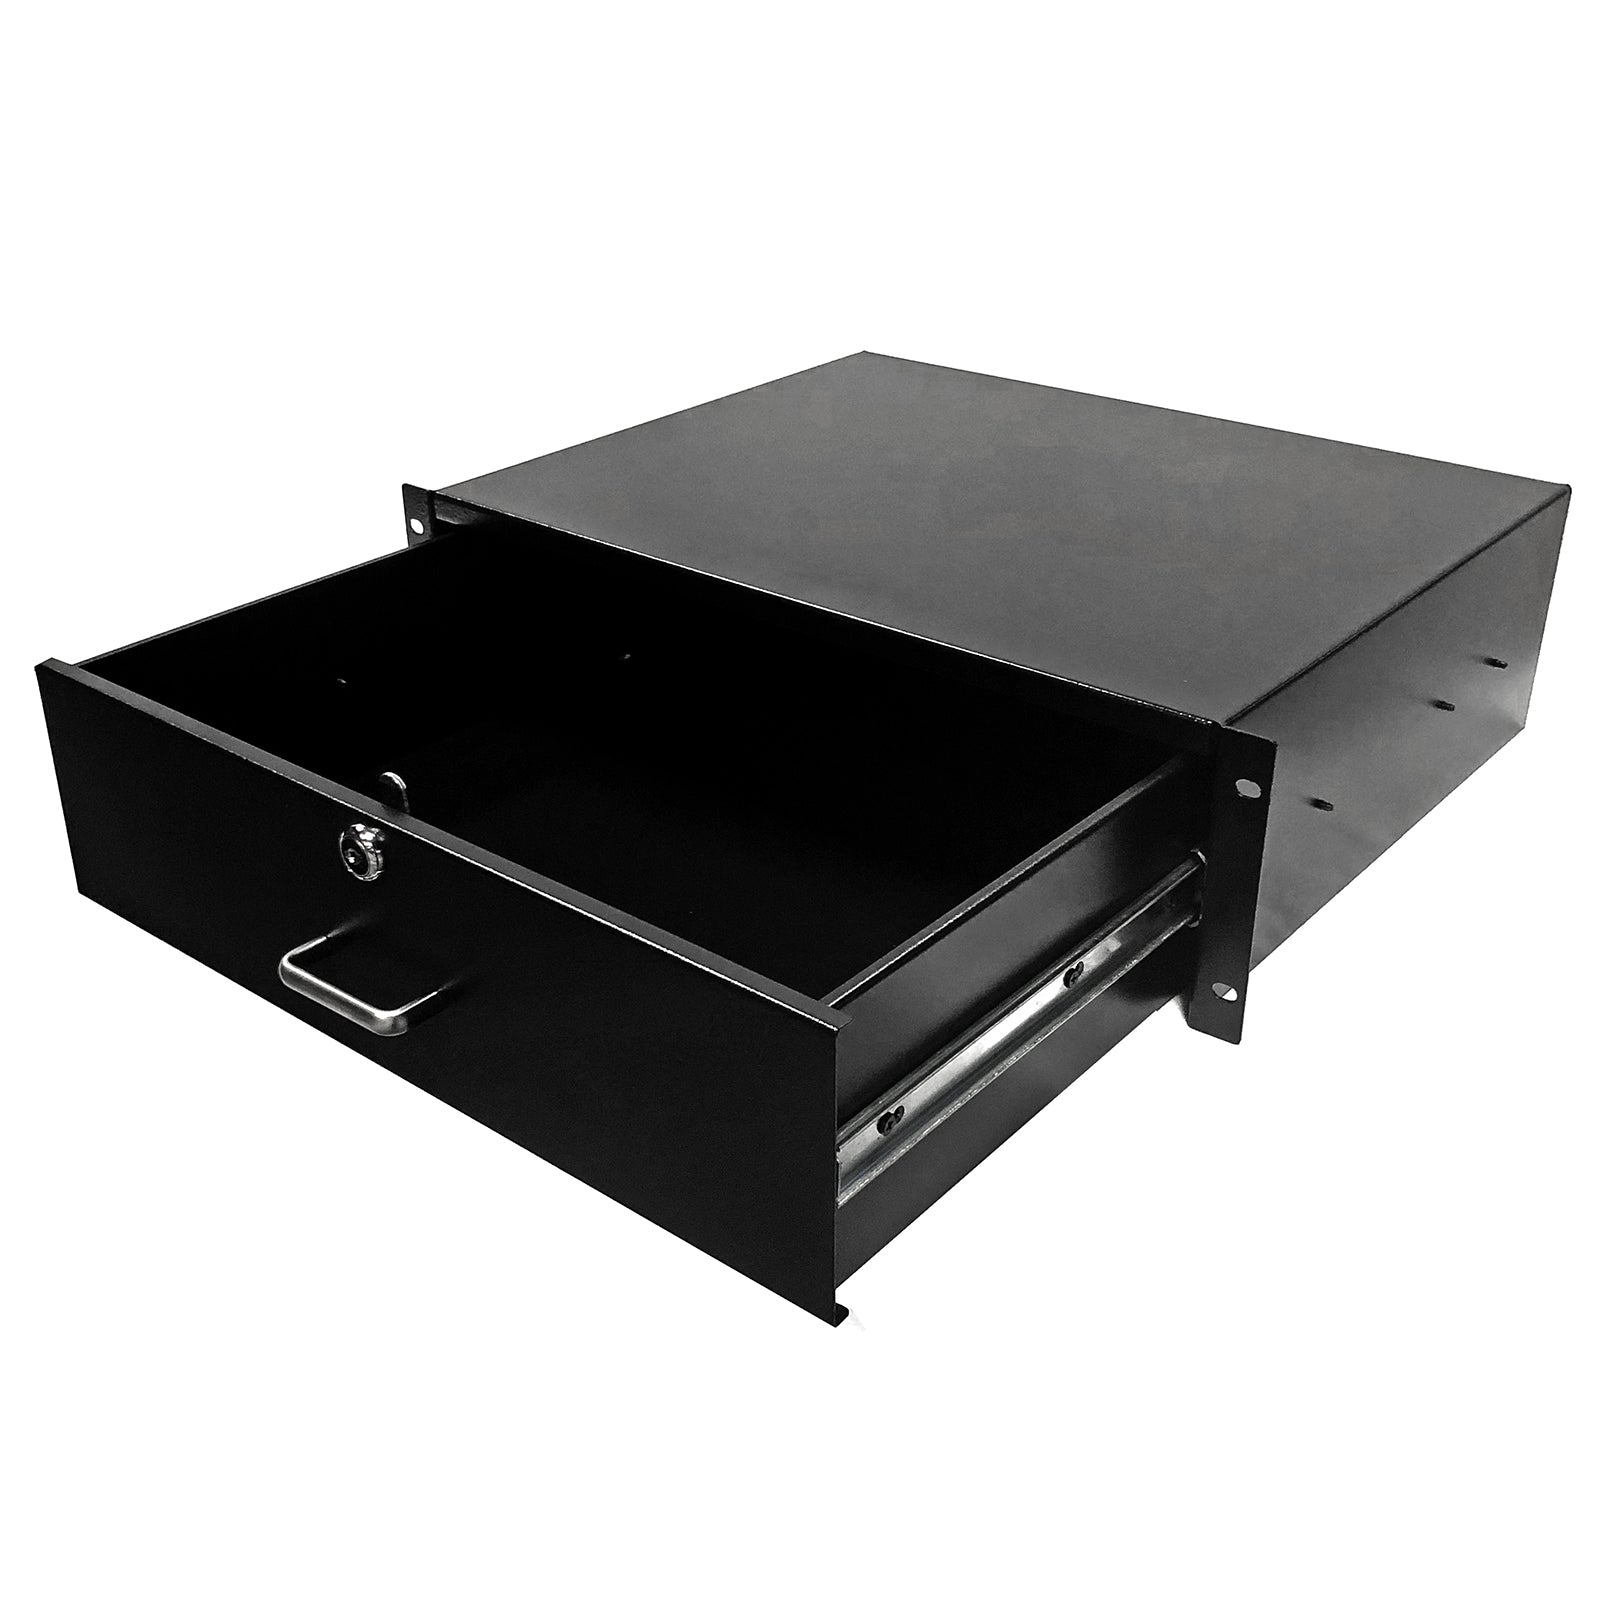 Aeons Premium 3U Rack Mount Sliding Drawer, Server Storage Cabinet Case with Lock